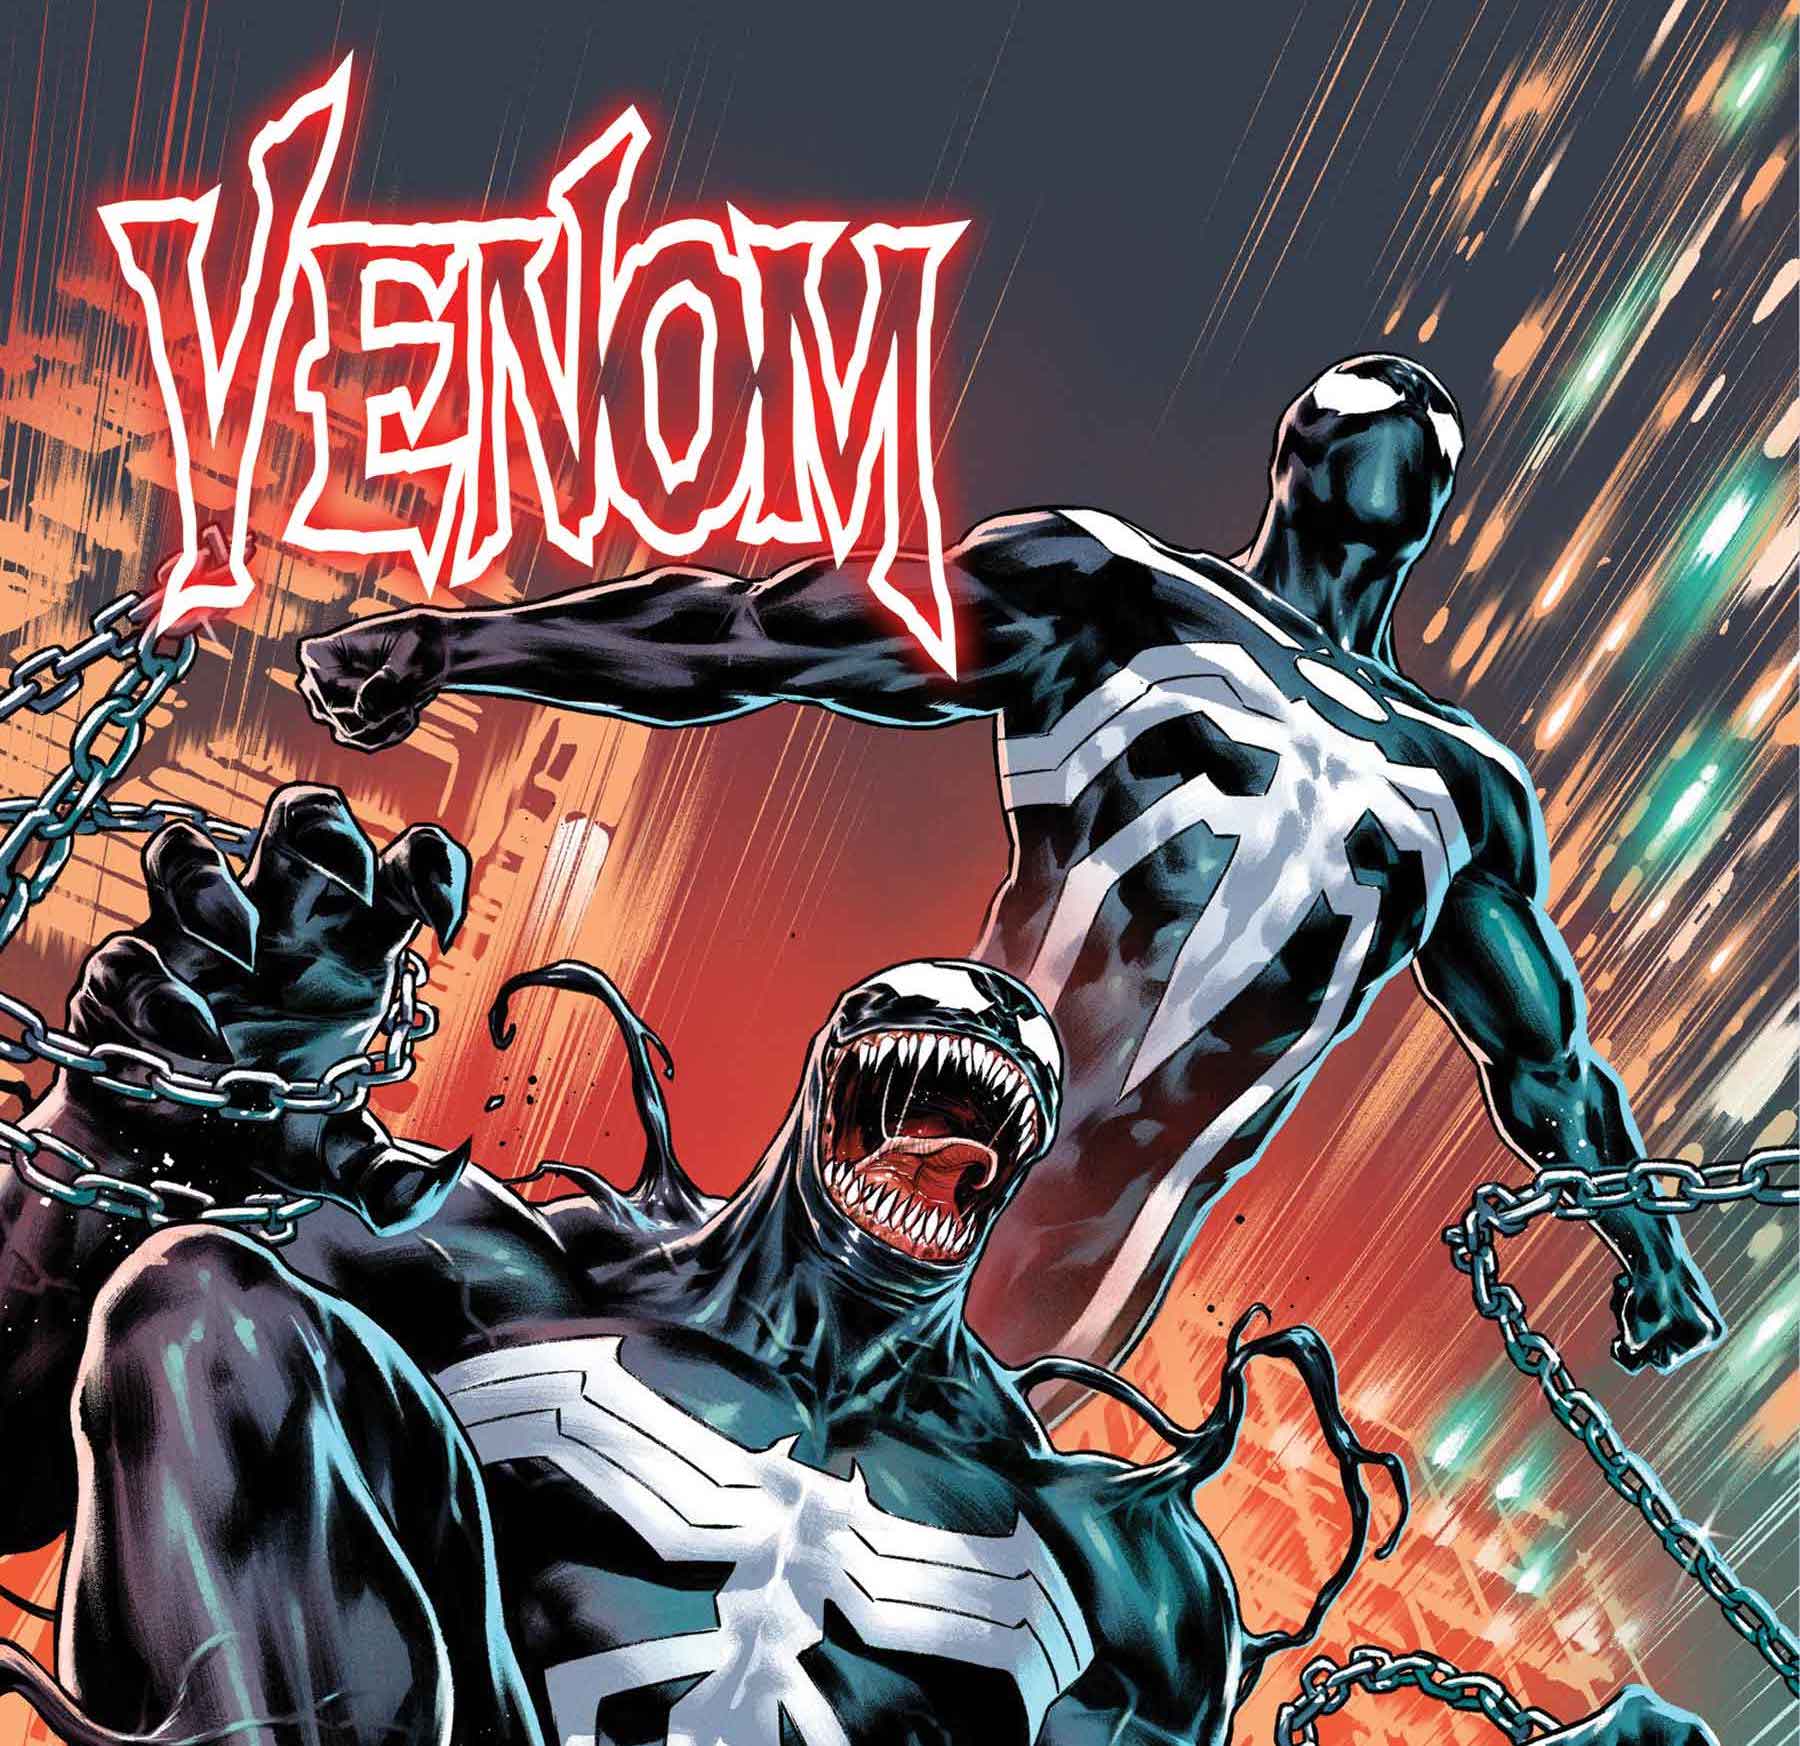 'Venom' #17 features Eddie vs. Bedlam with new artist Cafu joining creative team